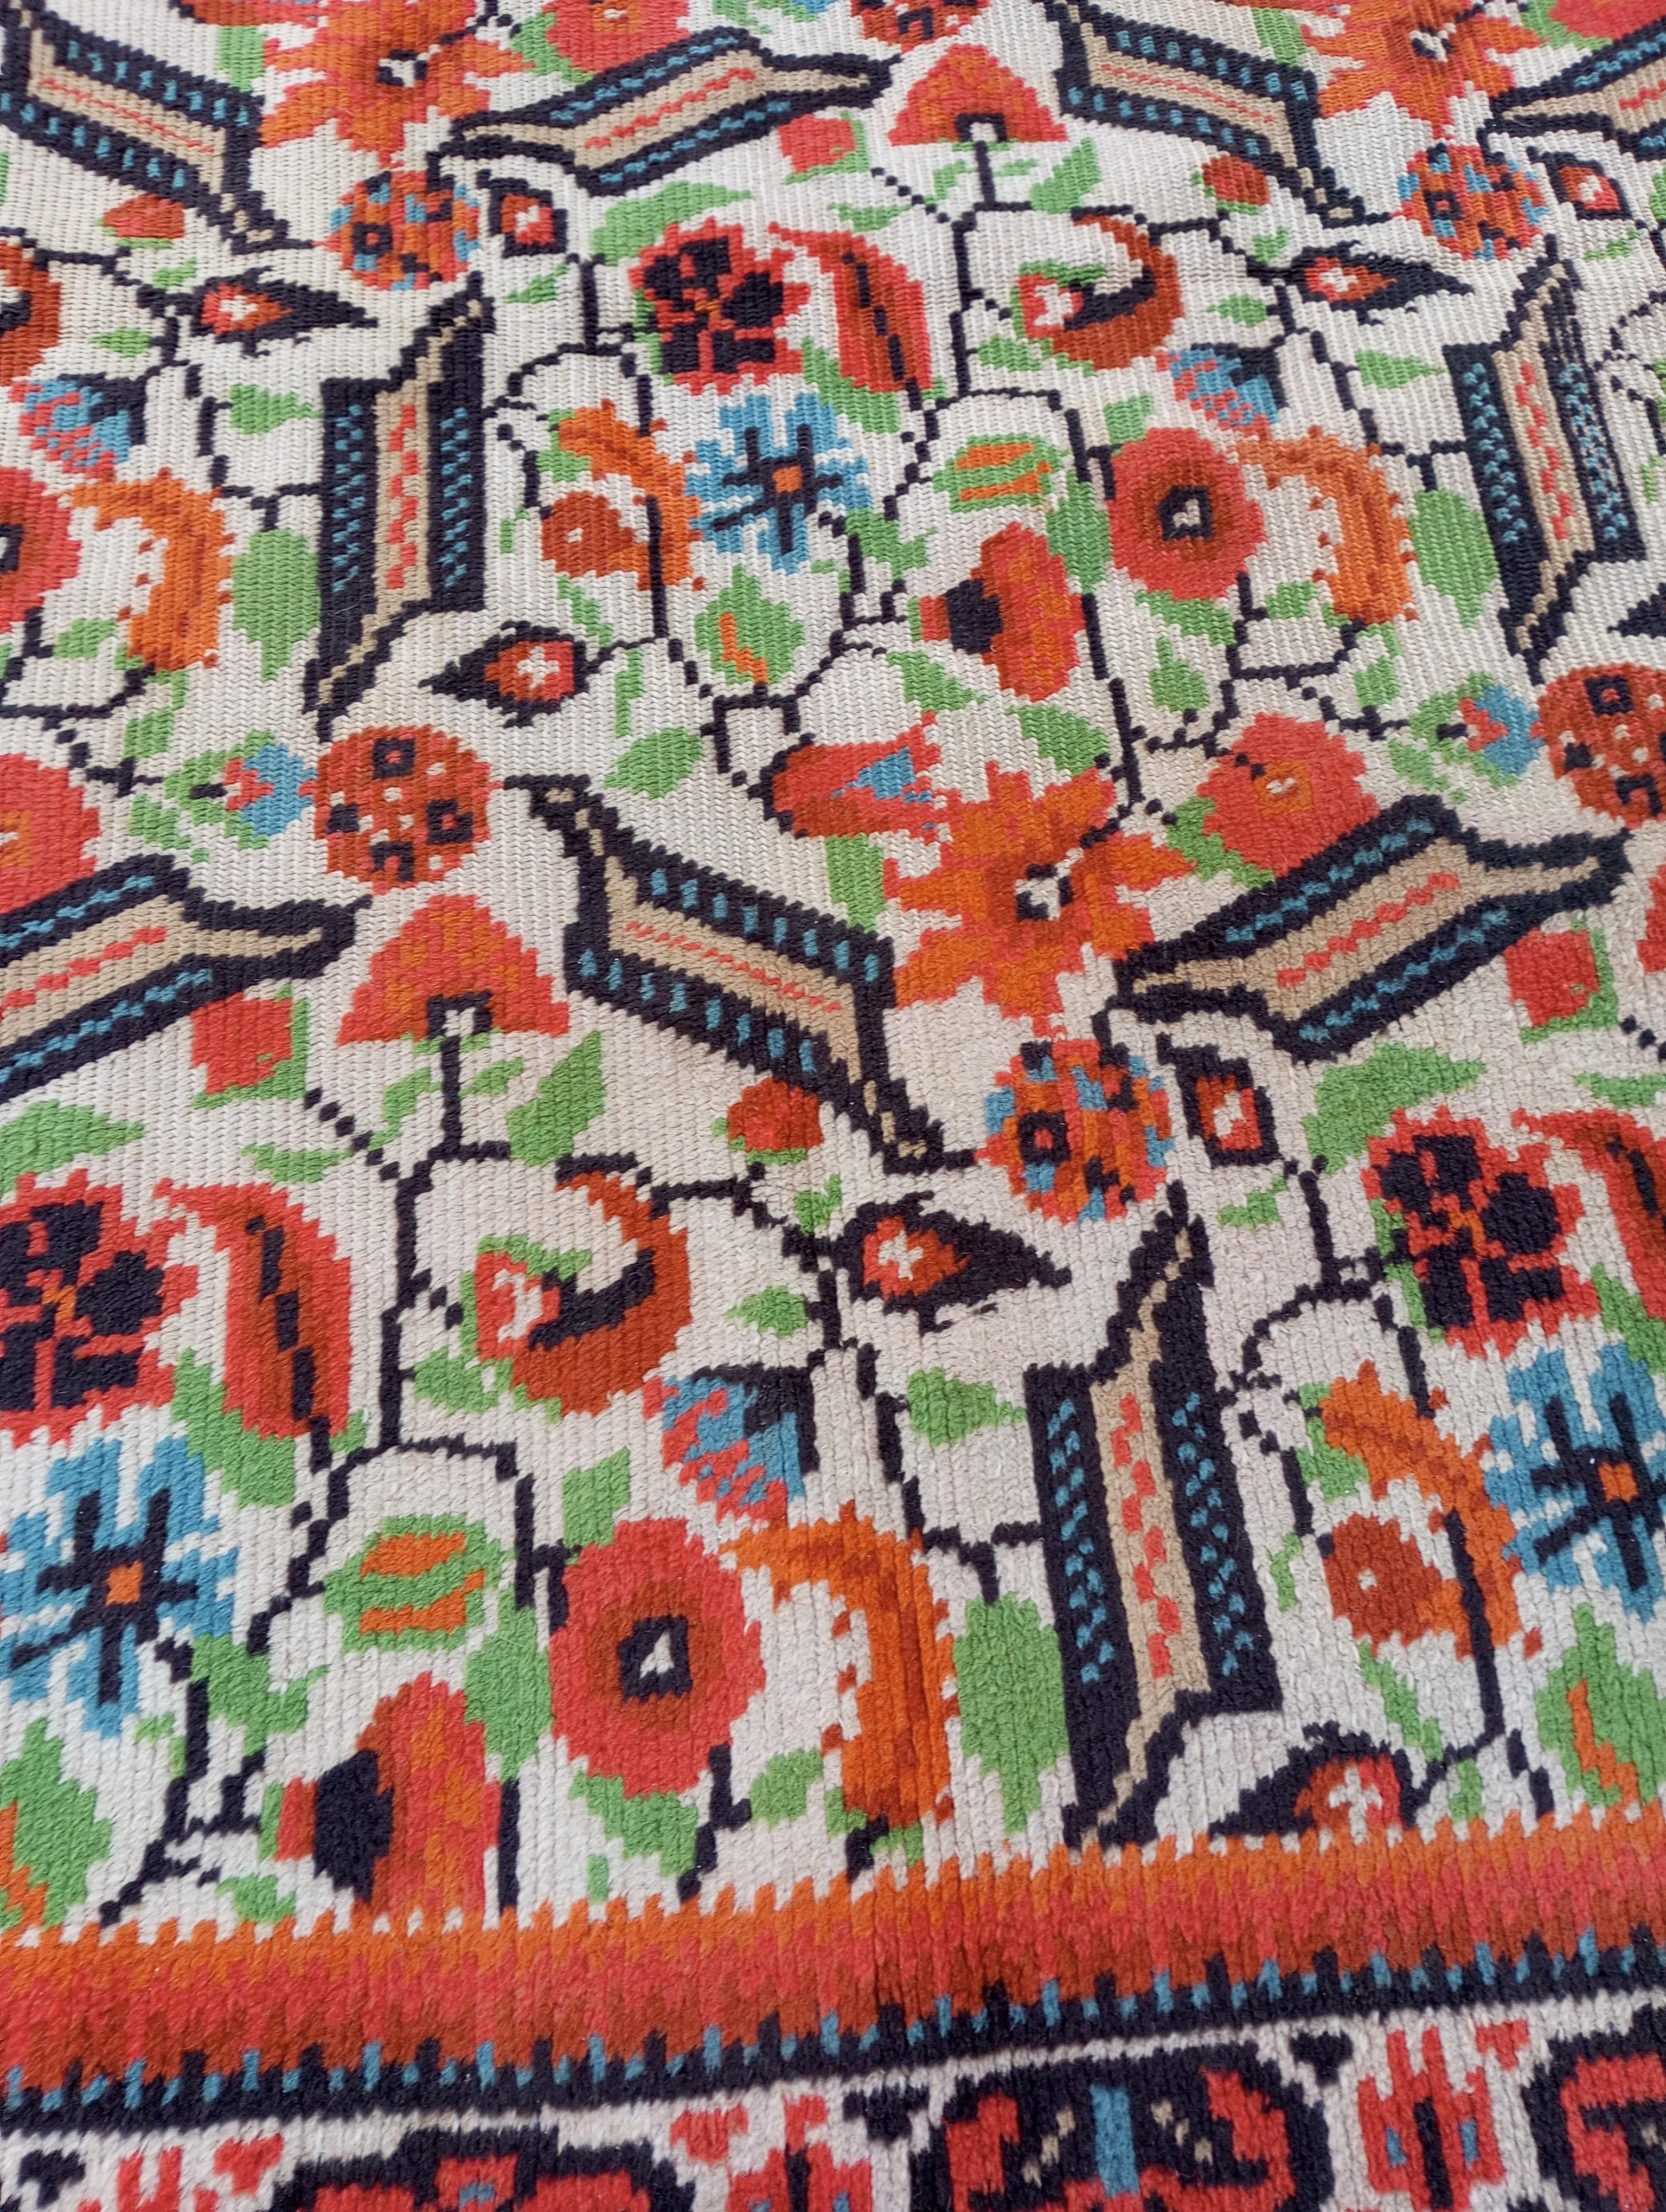 Austrian European Anatolian-style carpet with Ushak design featuring birds (Austria) For Sale